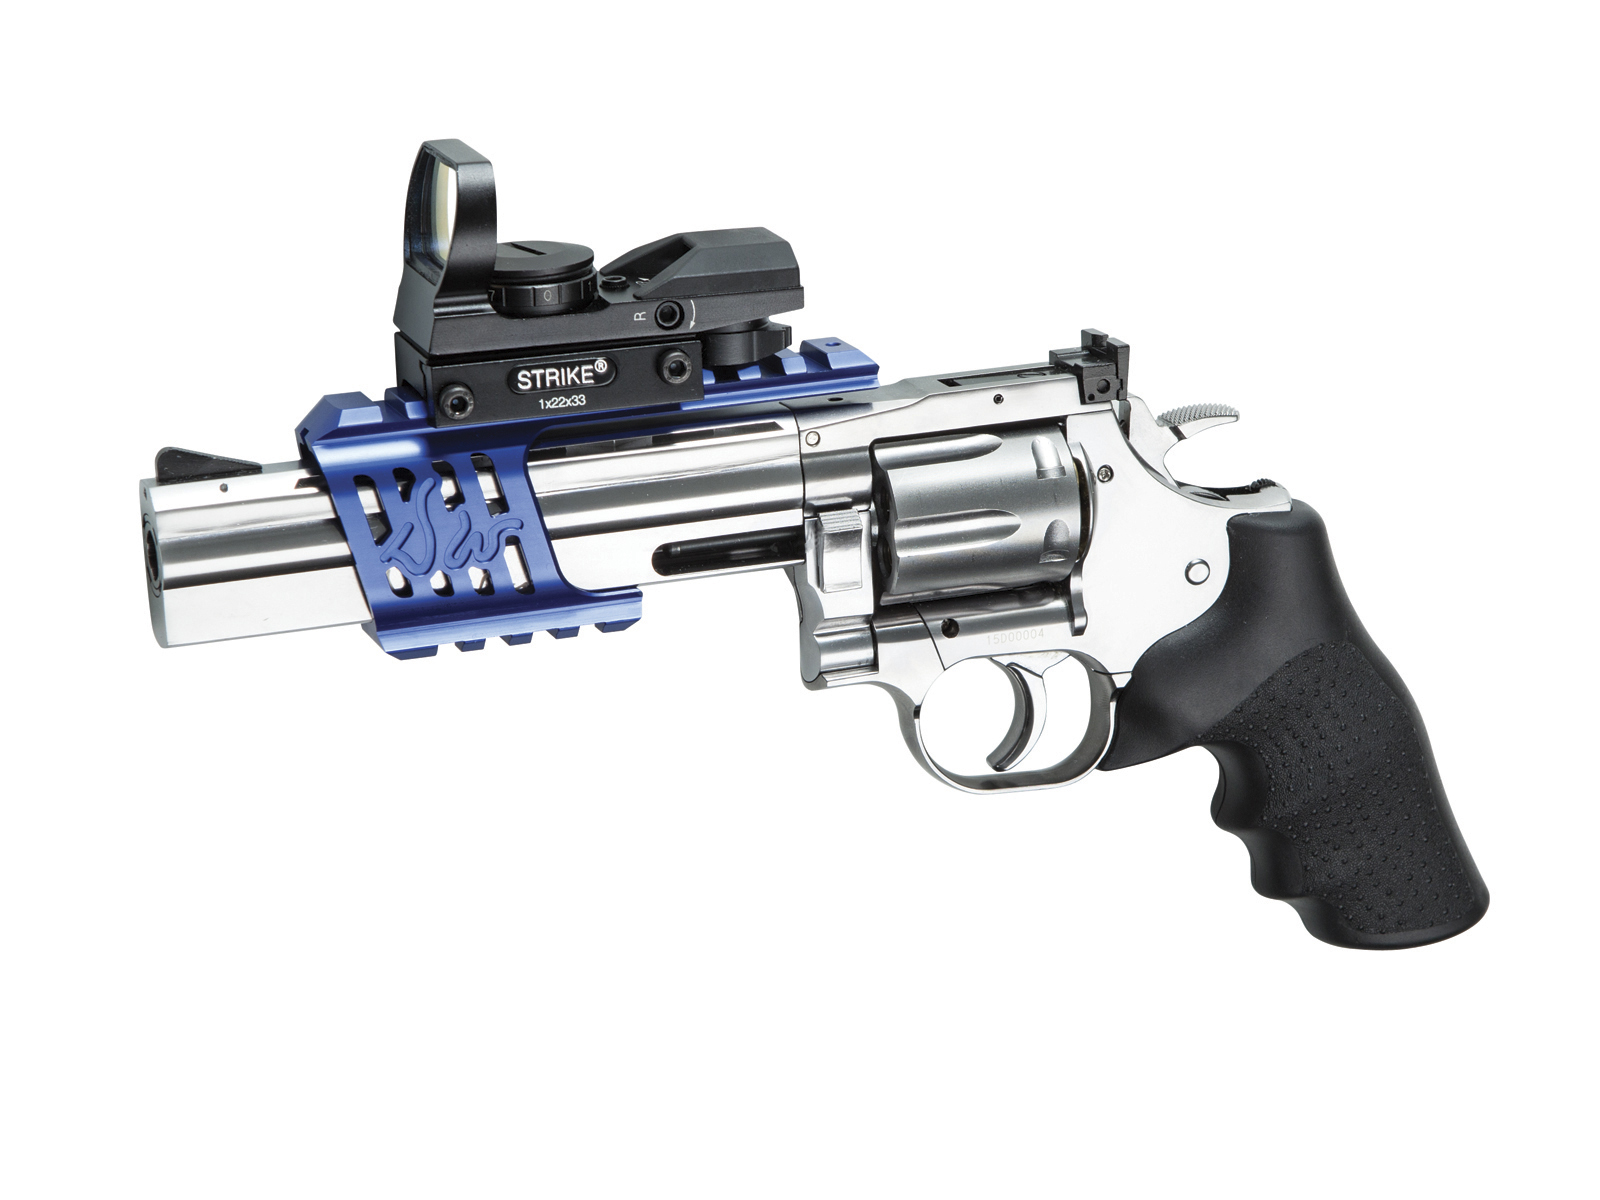 Revolver ASG Dan Wesson 715 6" Chromé CO2